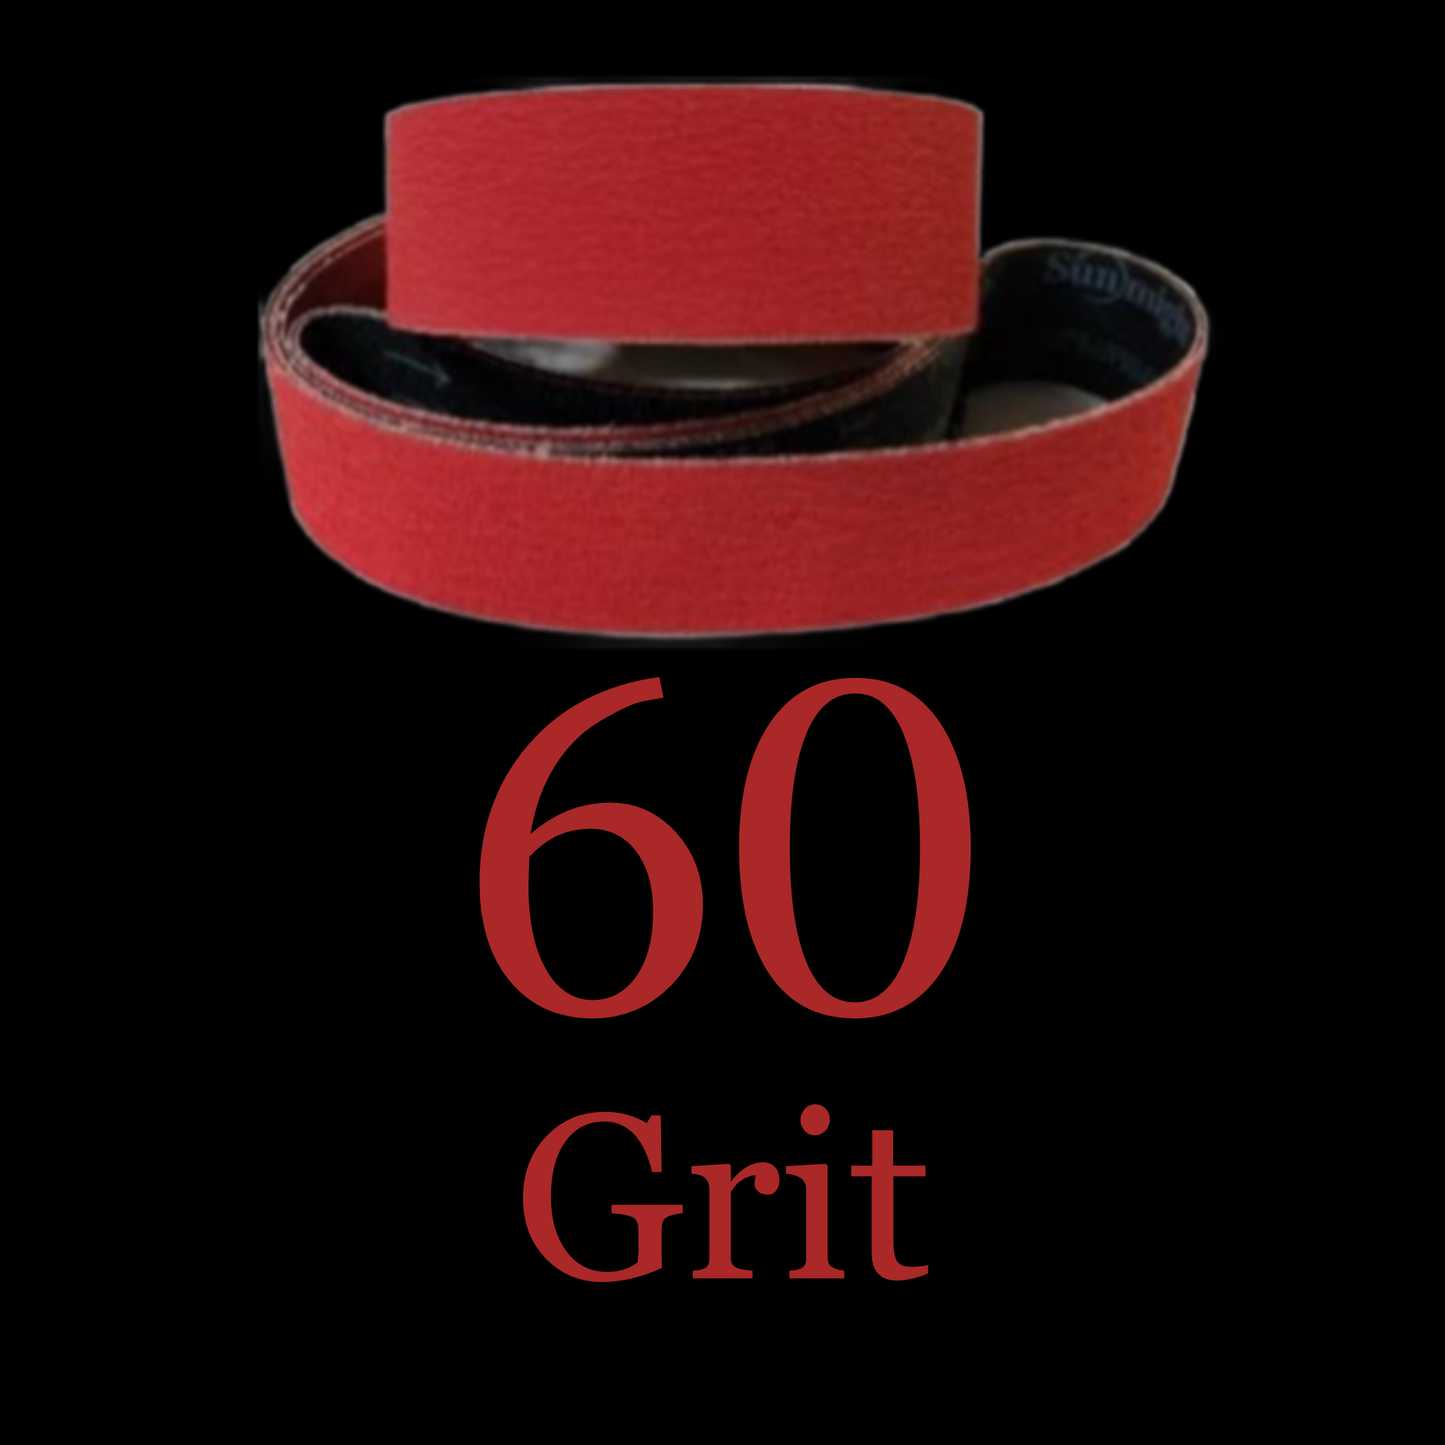 2” x 72” Metal Eater Premium Ceramic Belts 60 Grit